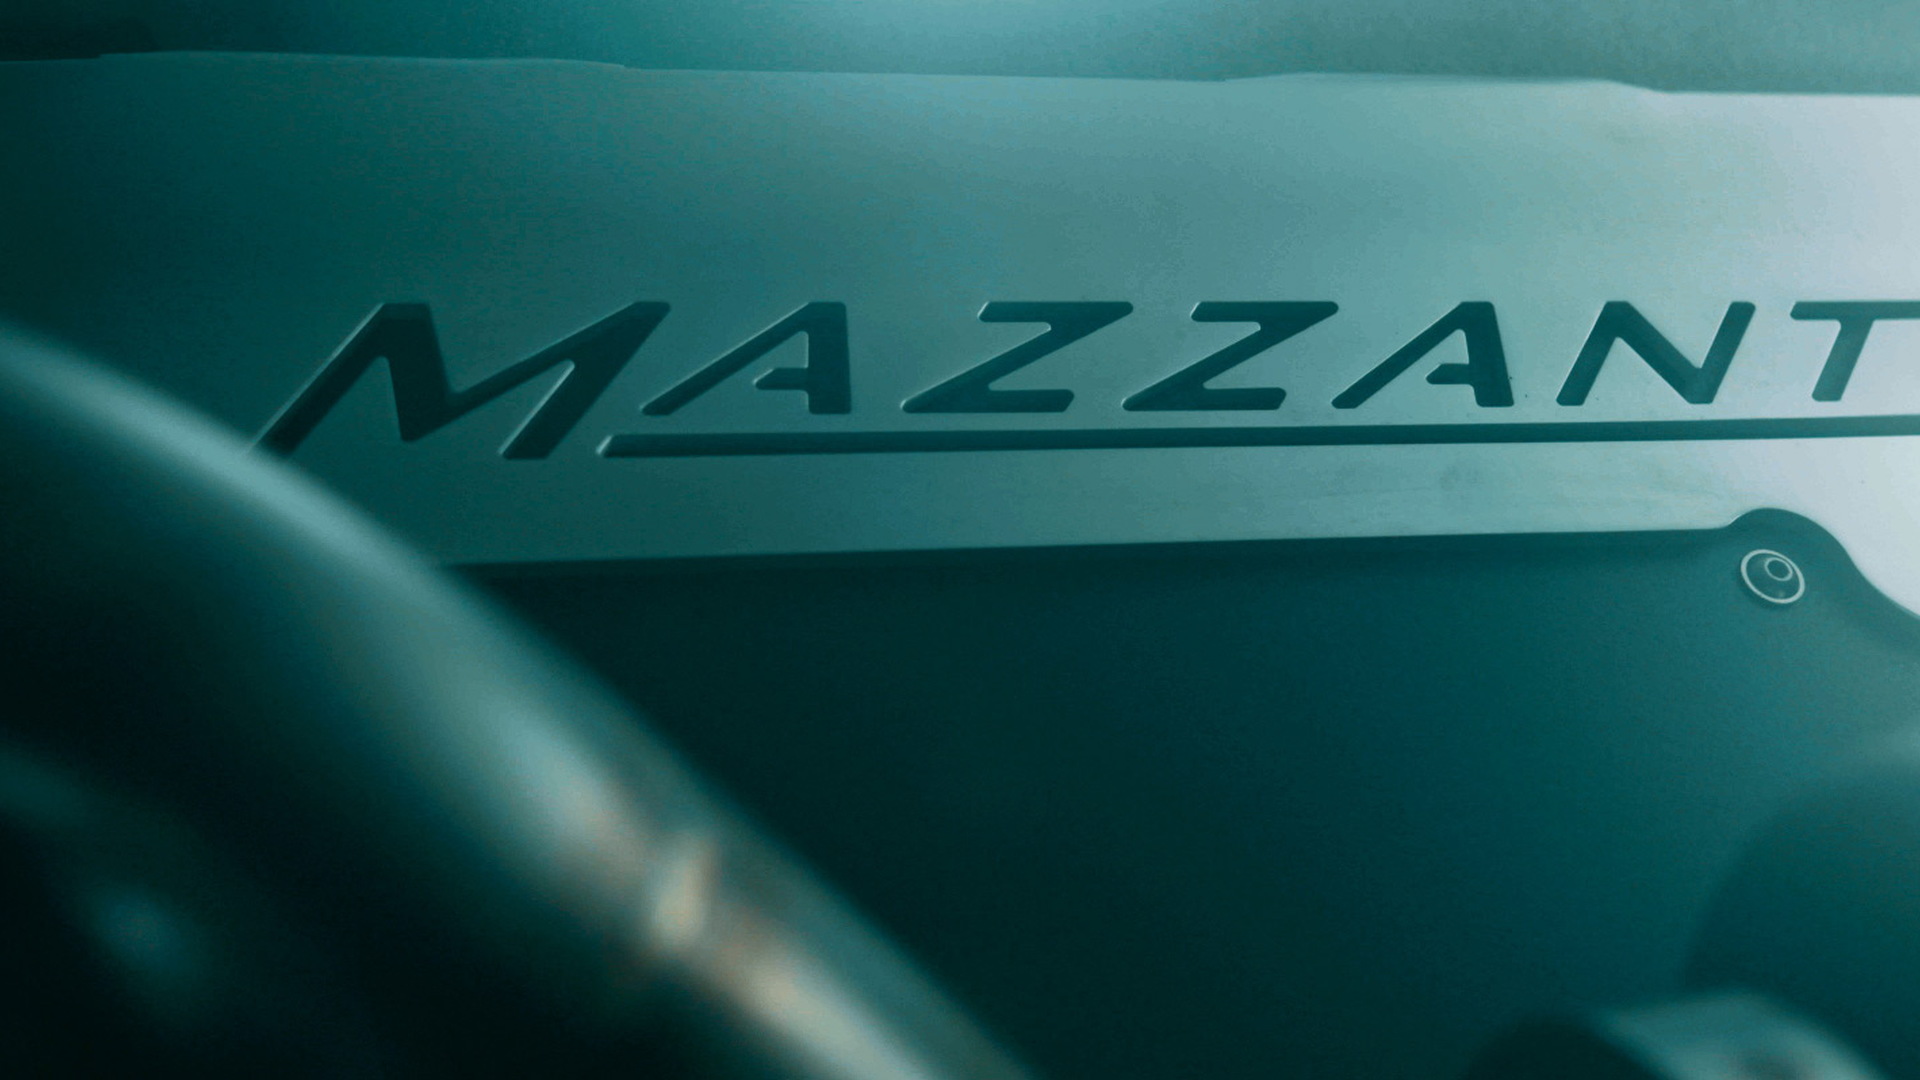 Teaser for Mazzanti EV-R debuting at 2016 Turin Auto Show